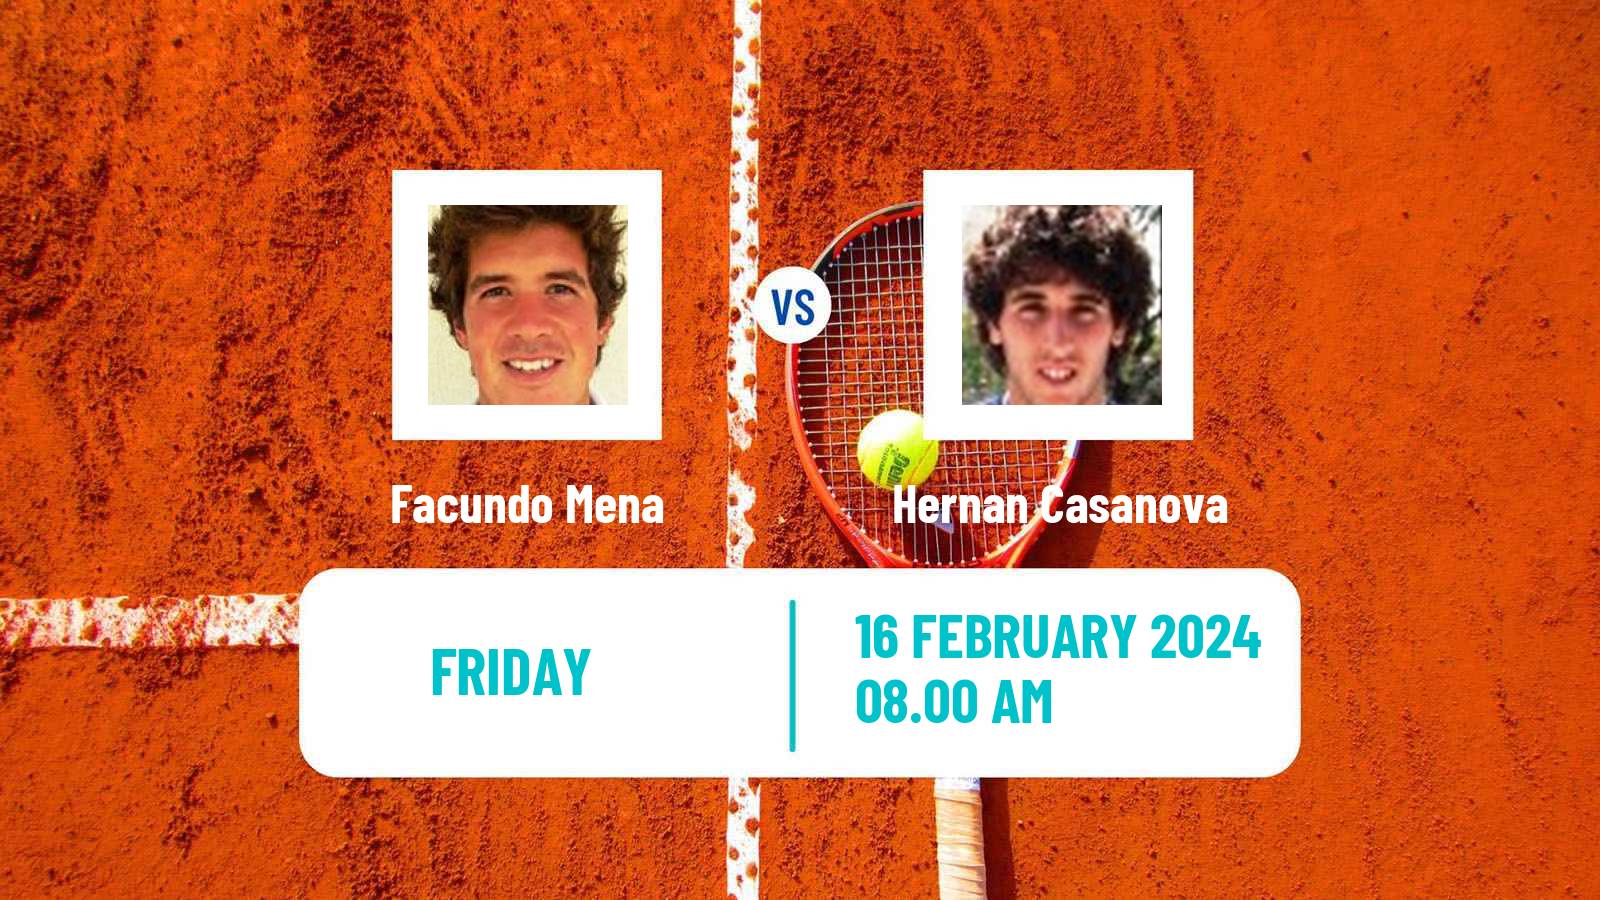 Tennis ITF M25 Punta Del Este 2 Men Facundo Mena - Hernan Casanova